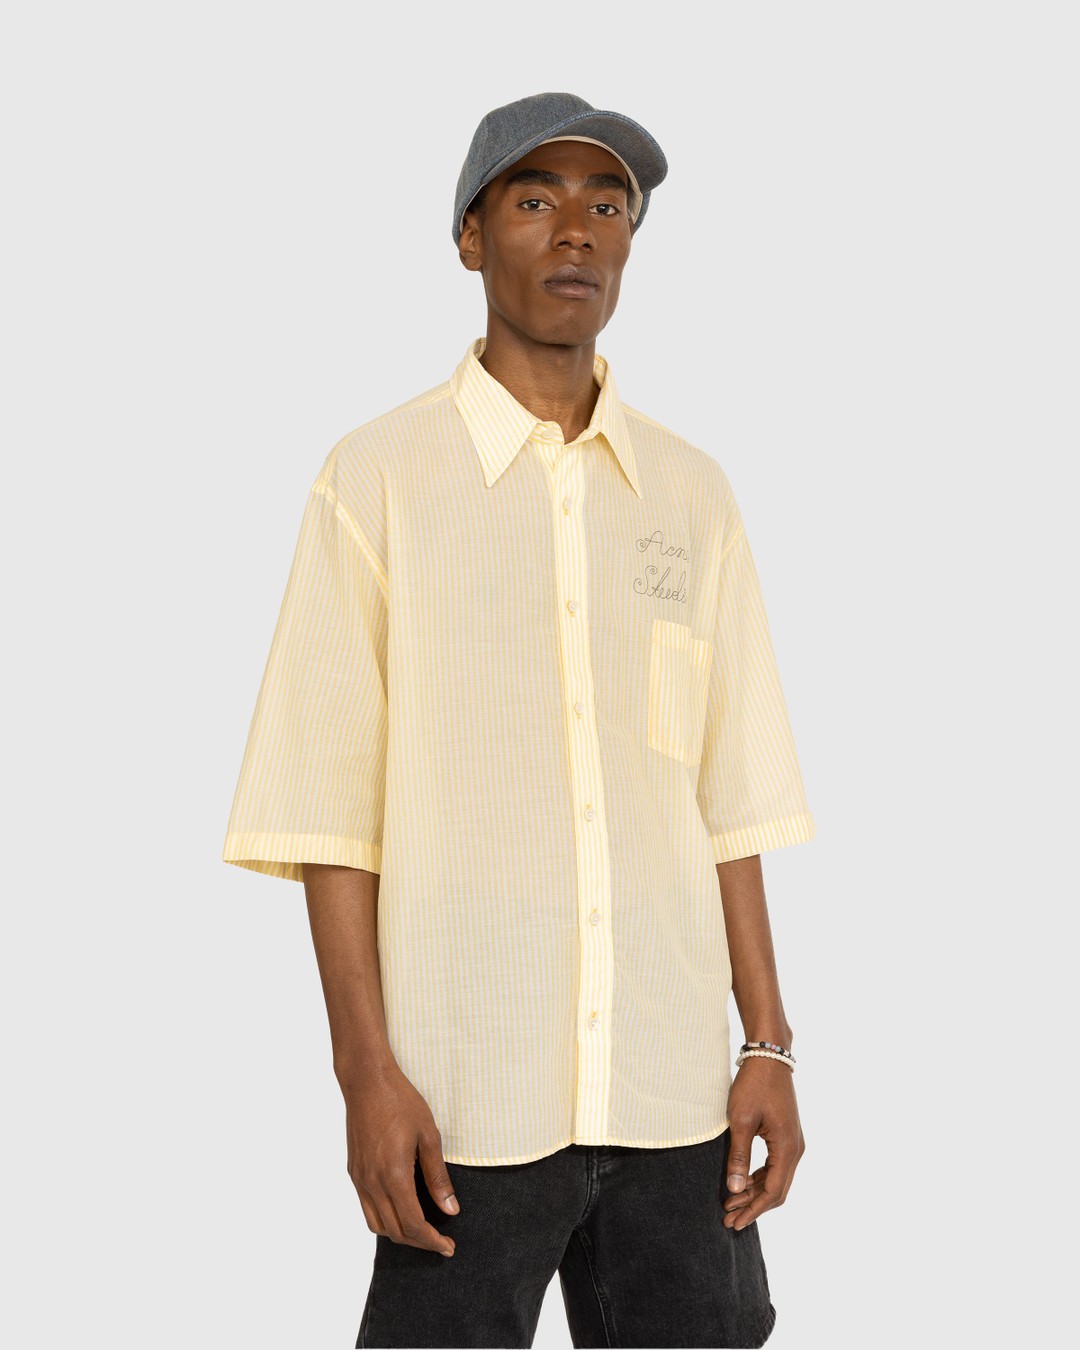 Acne Studios – Short Sleeve Button-Up Shirt Yellow - Shirts - Yellow - Image 2